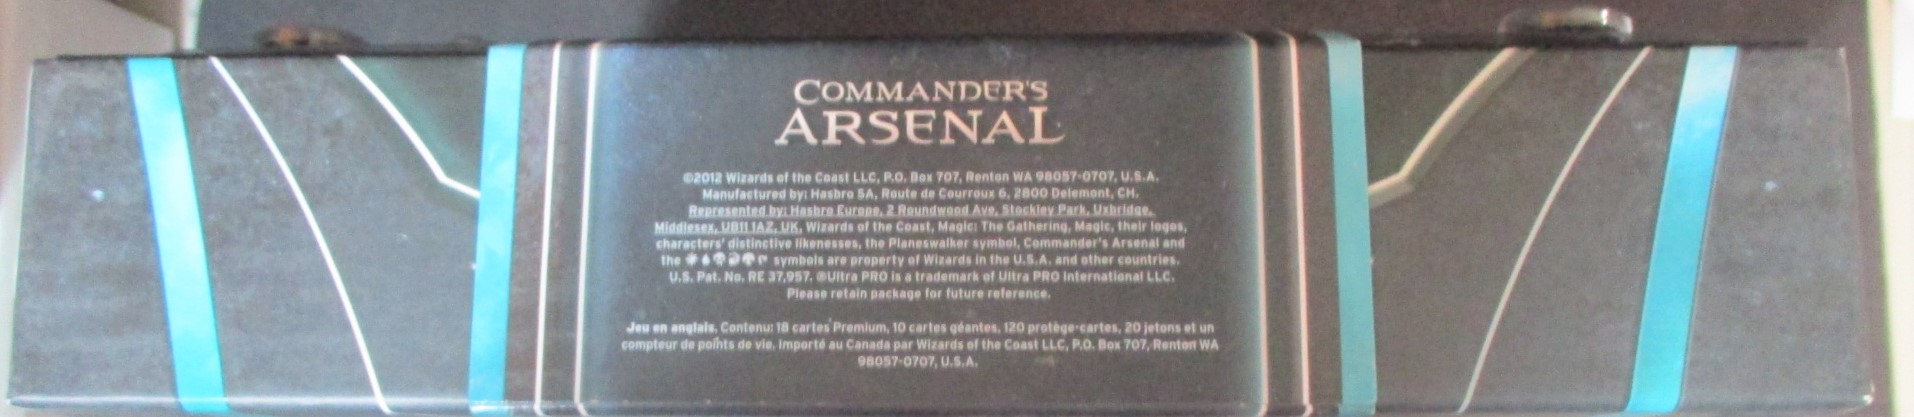 Commanders Arsenal